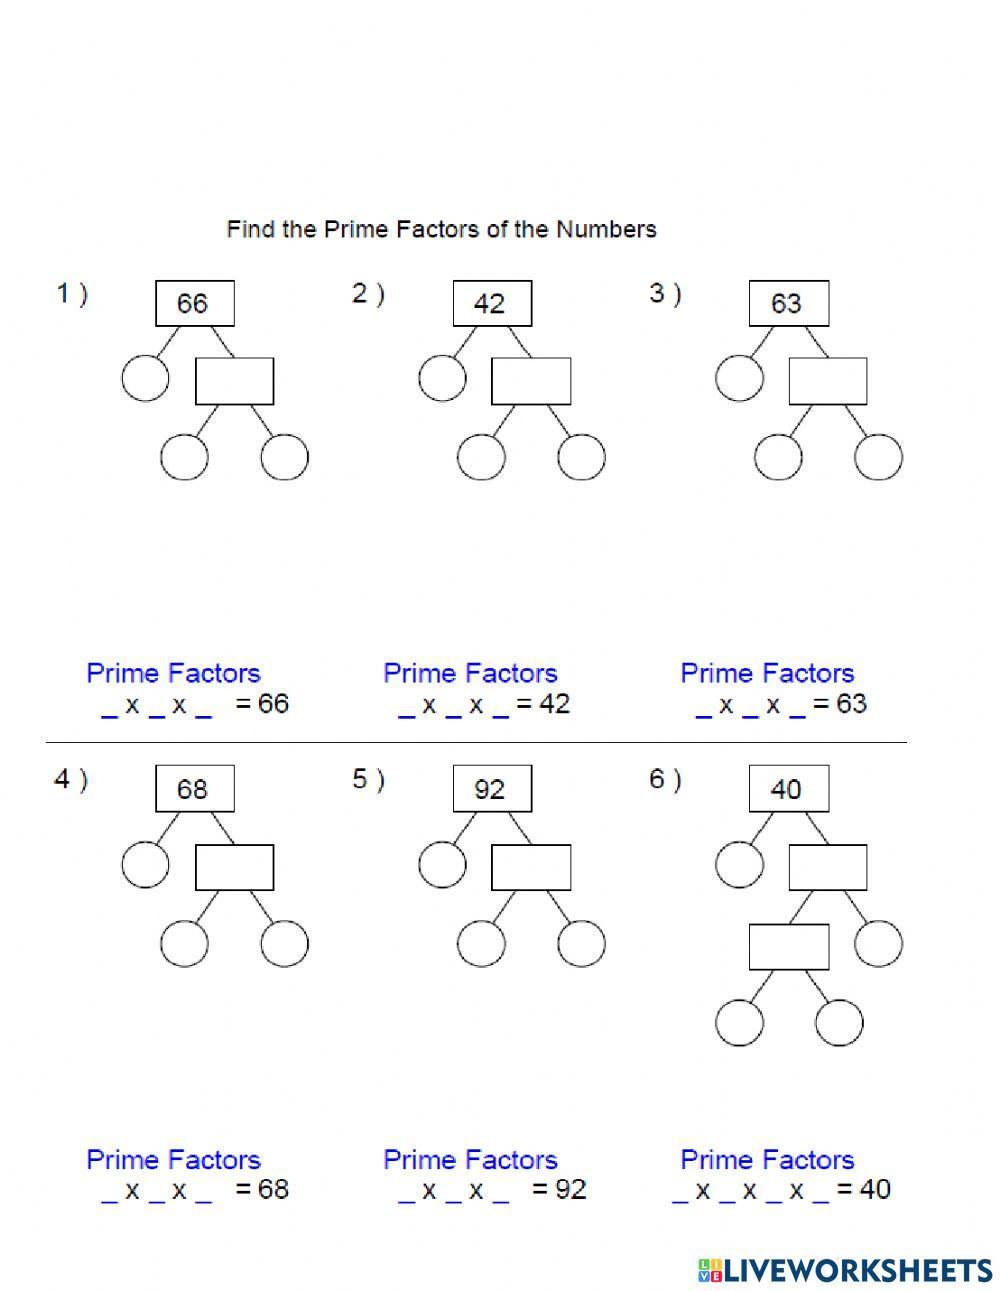 Prime factor tree